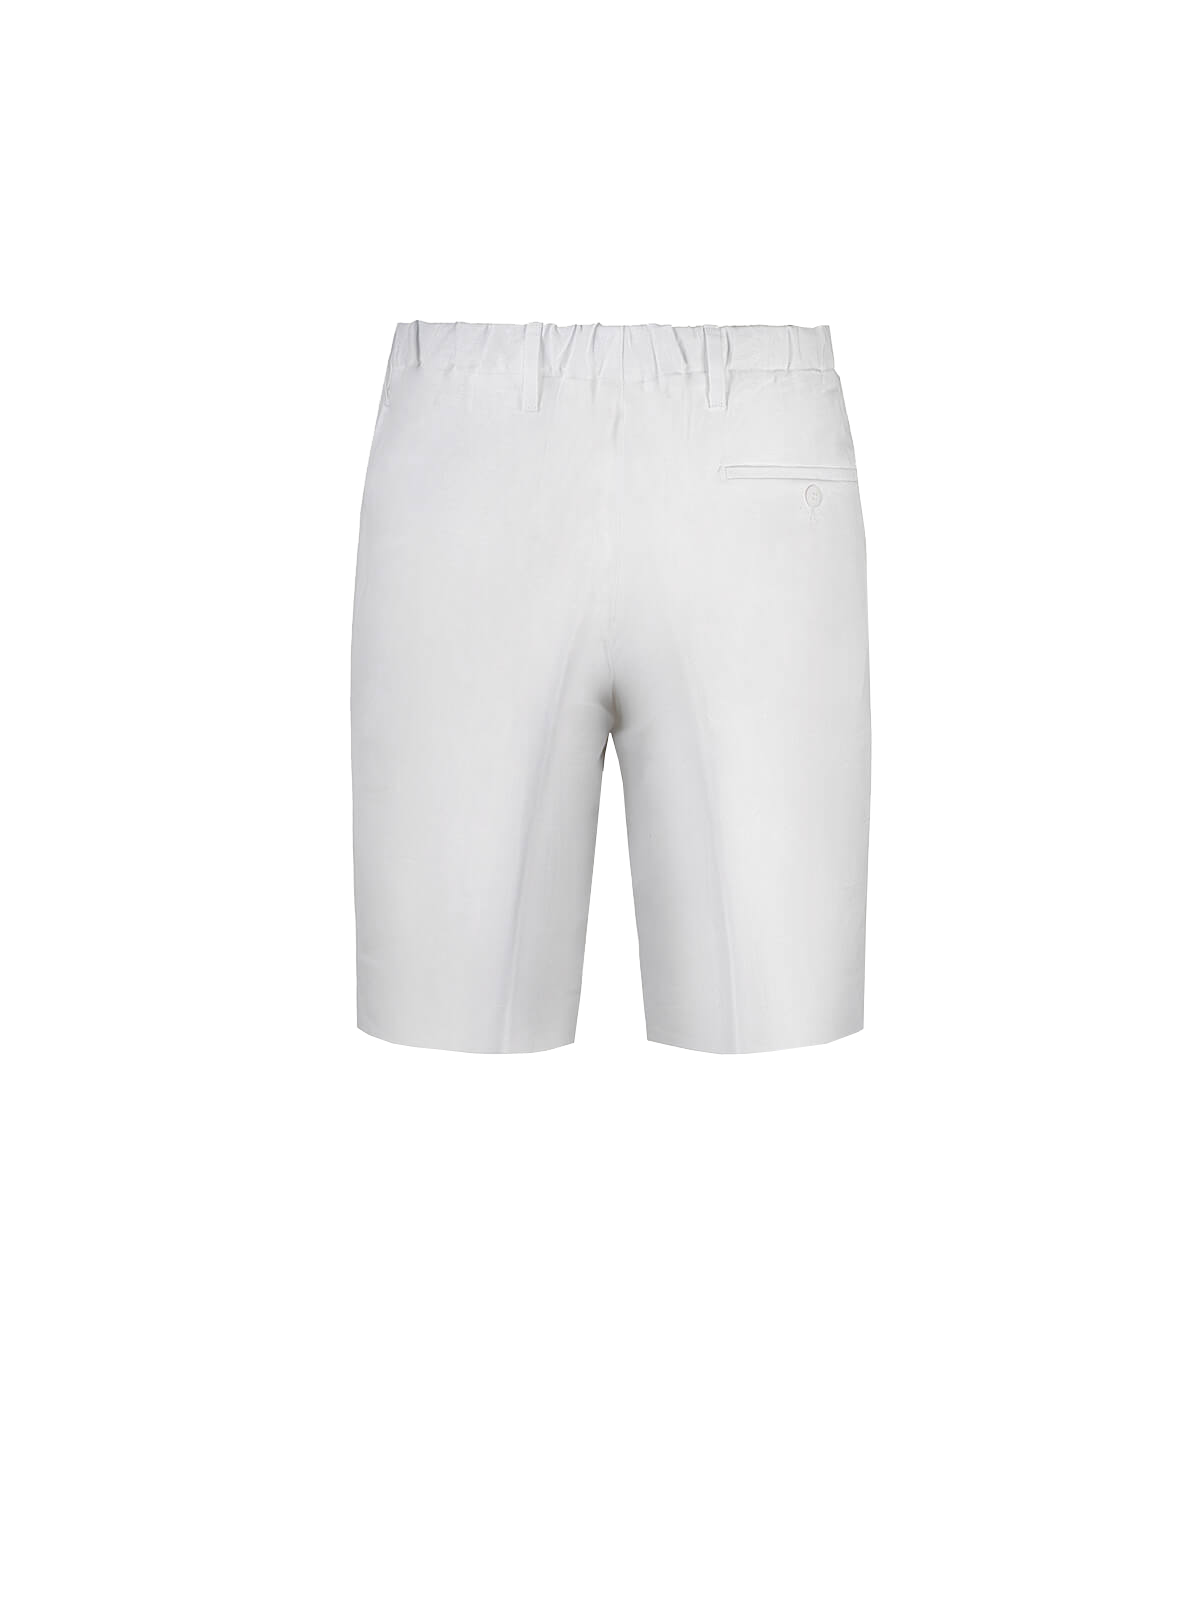 Bermuda Capri for men 100% Capri white linen pant  back